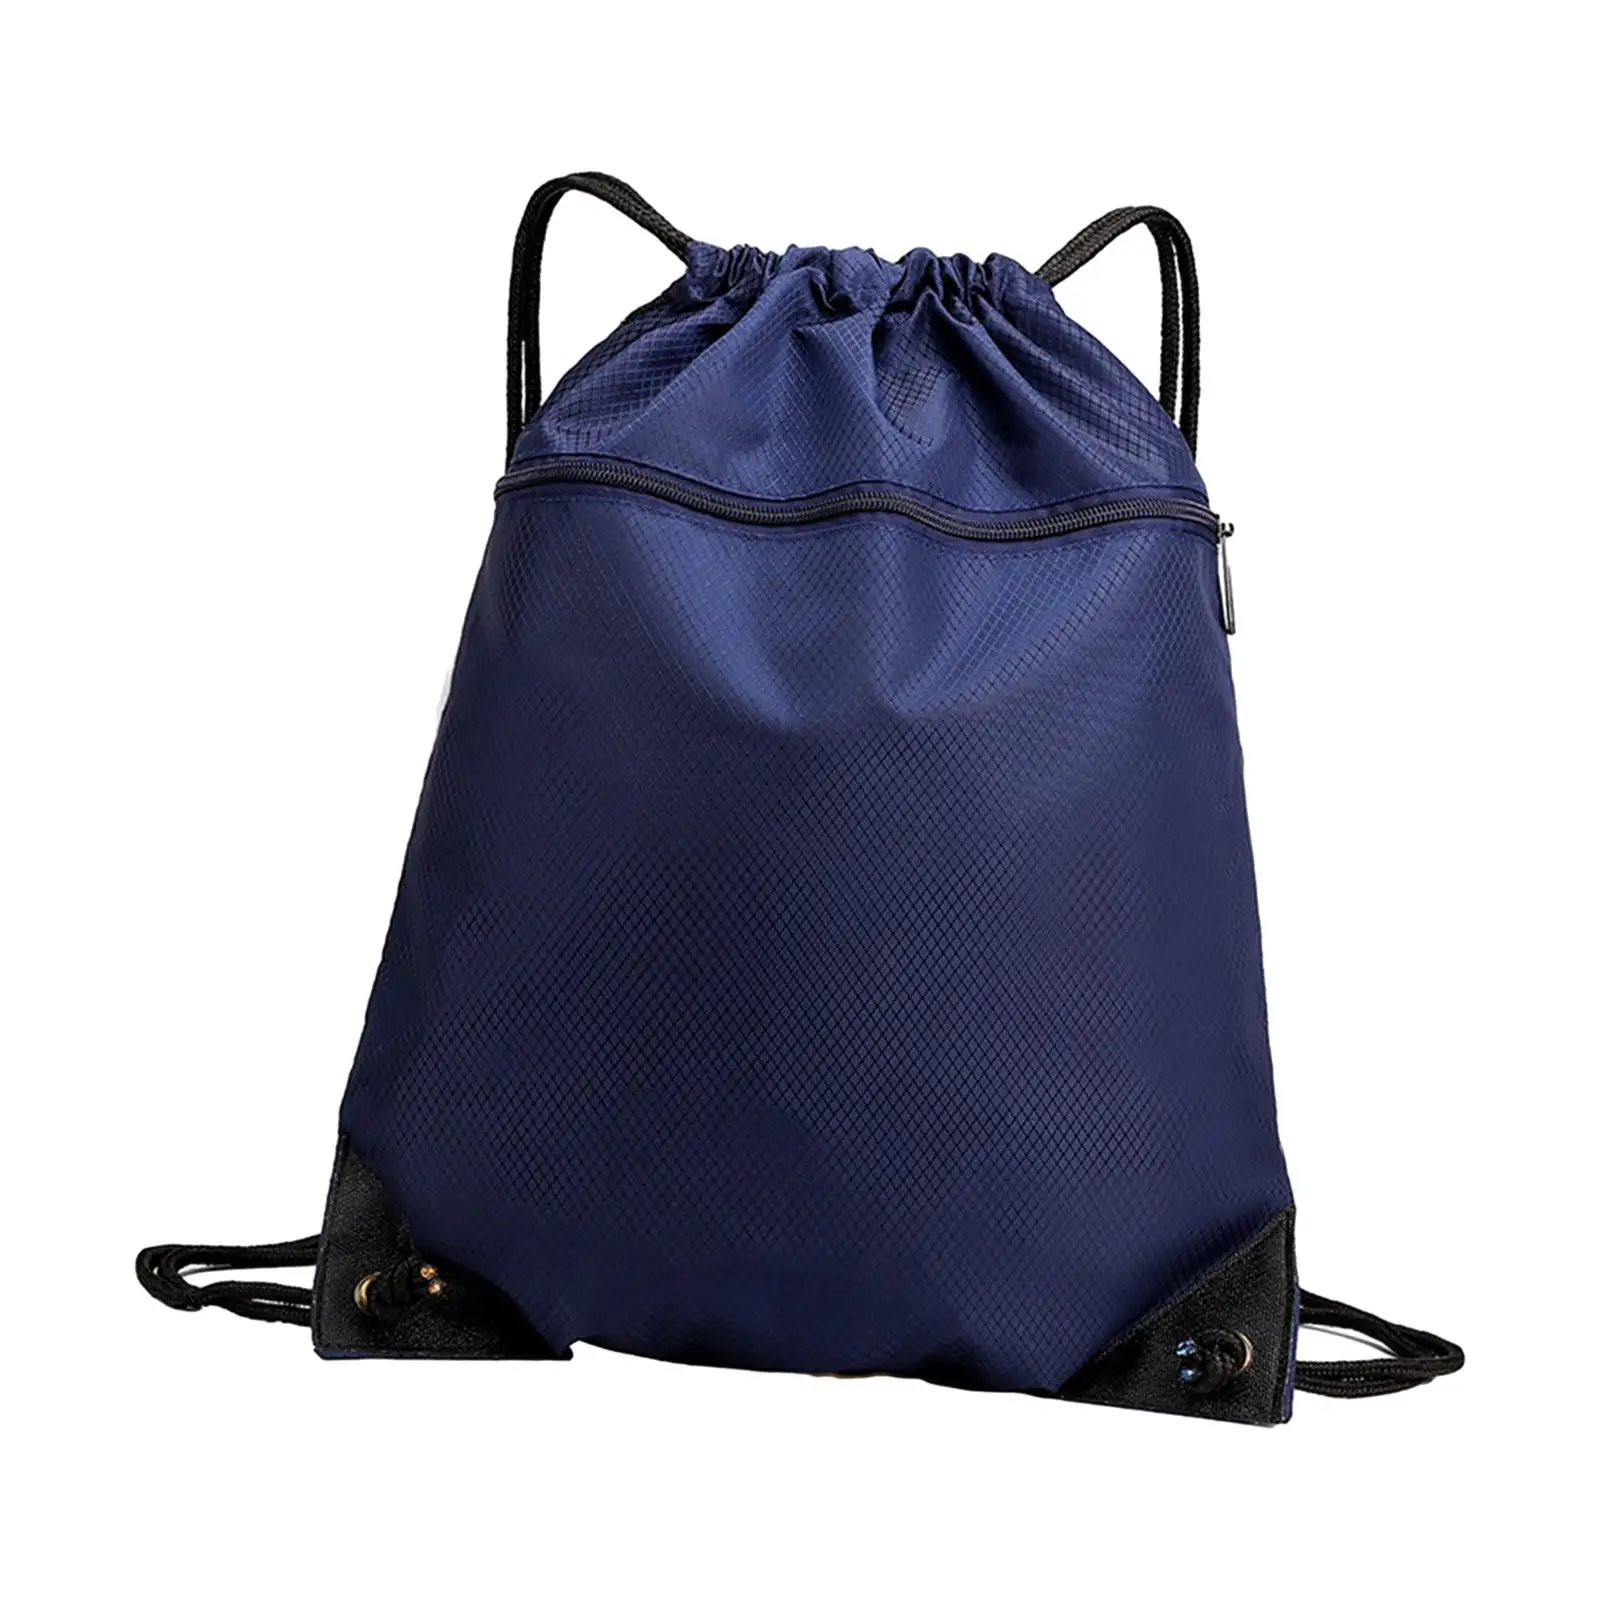 Drawstring Backpack Durable Draw String Bag for Soccer Marathons Traveling